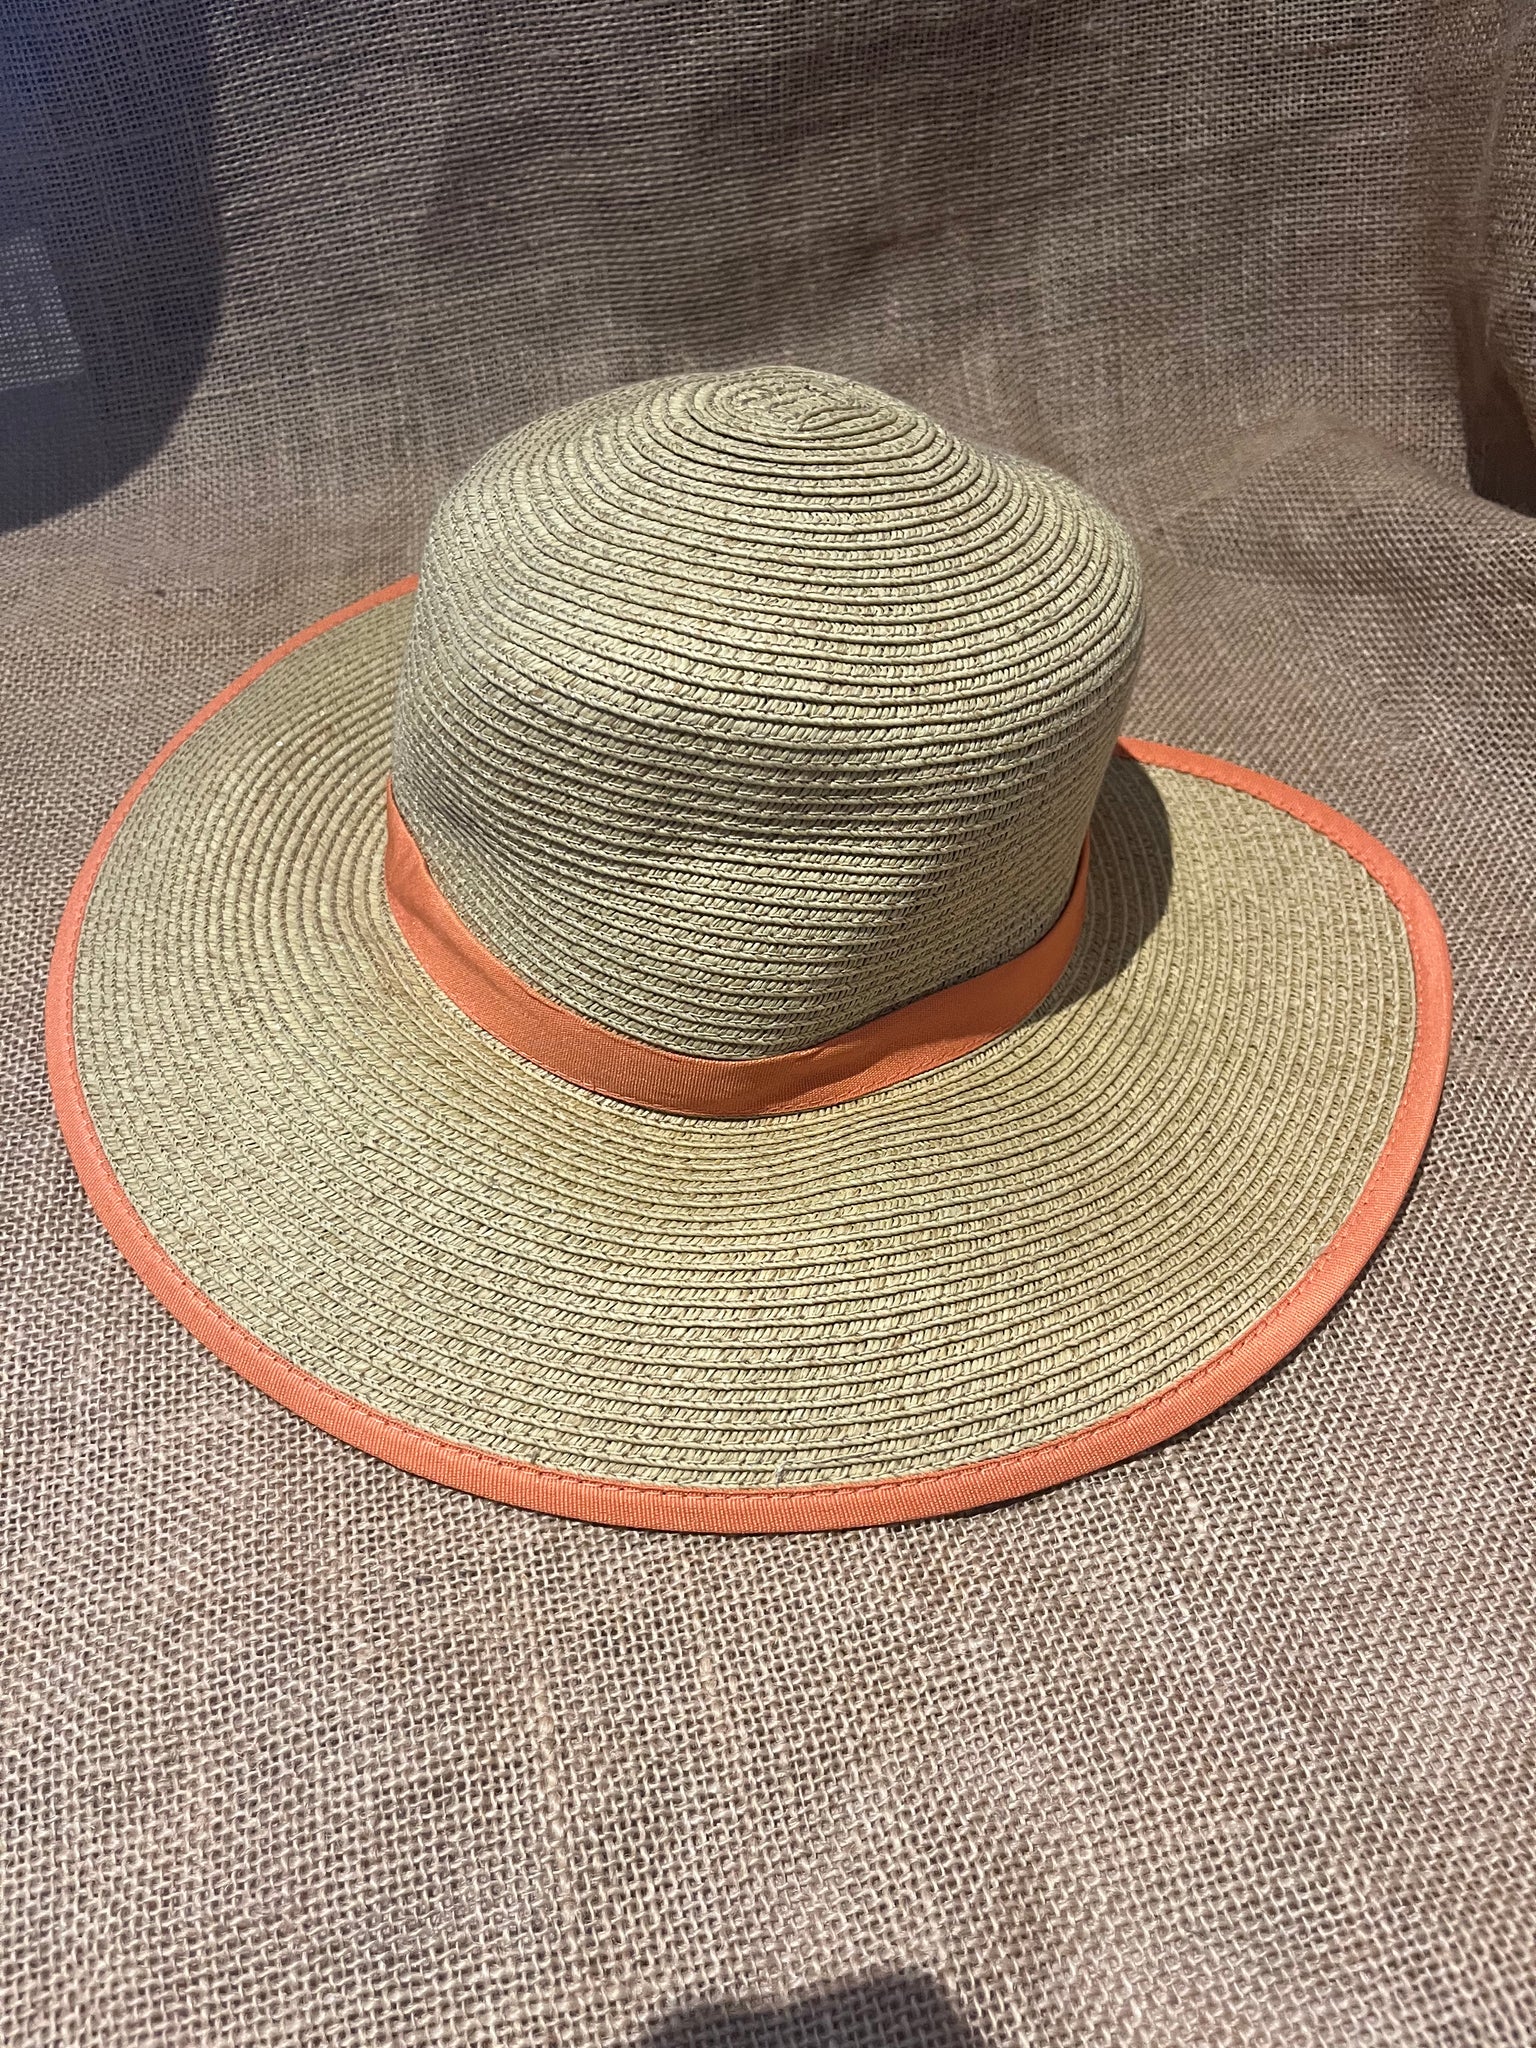 Straw hat with orange trim and ponytail slit